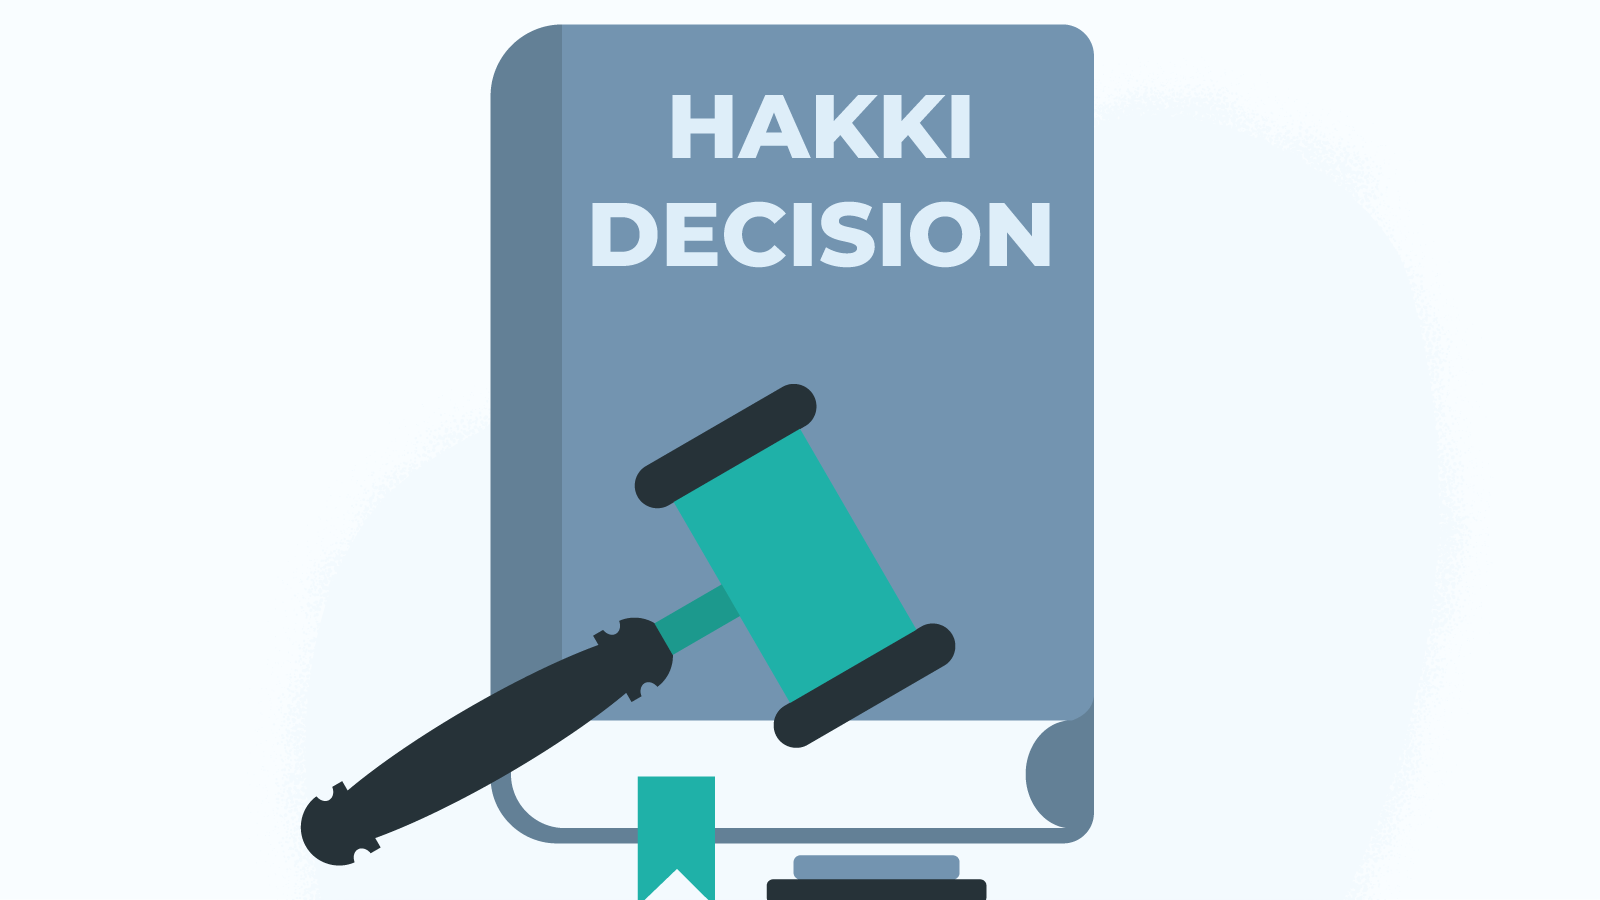 The Hakki Decision